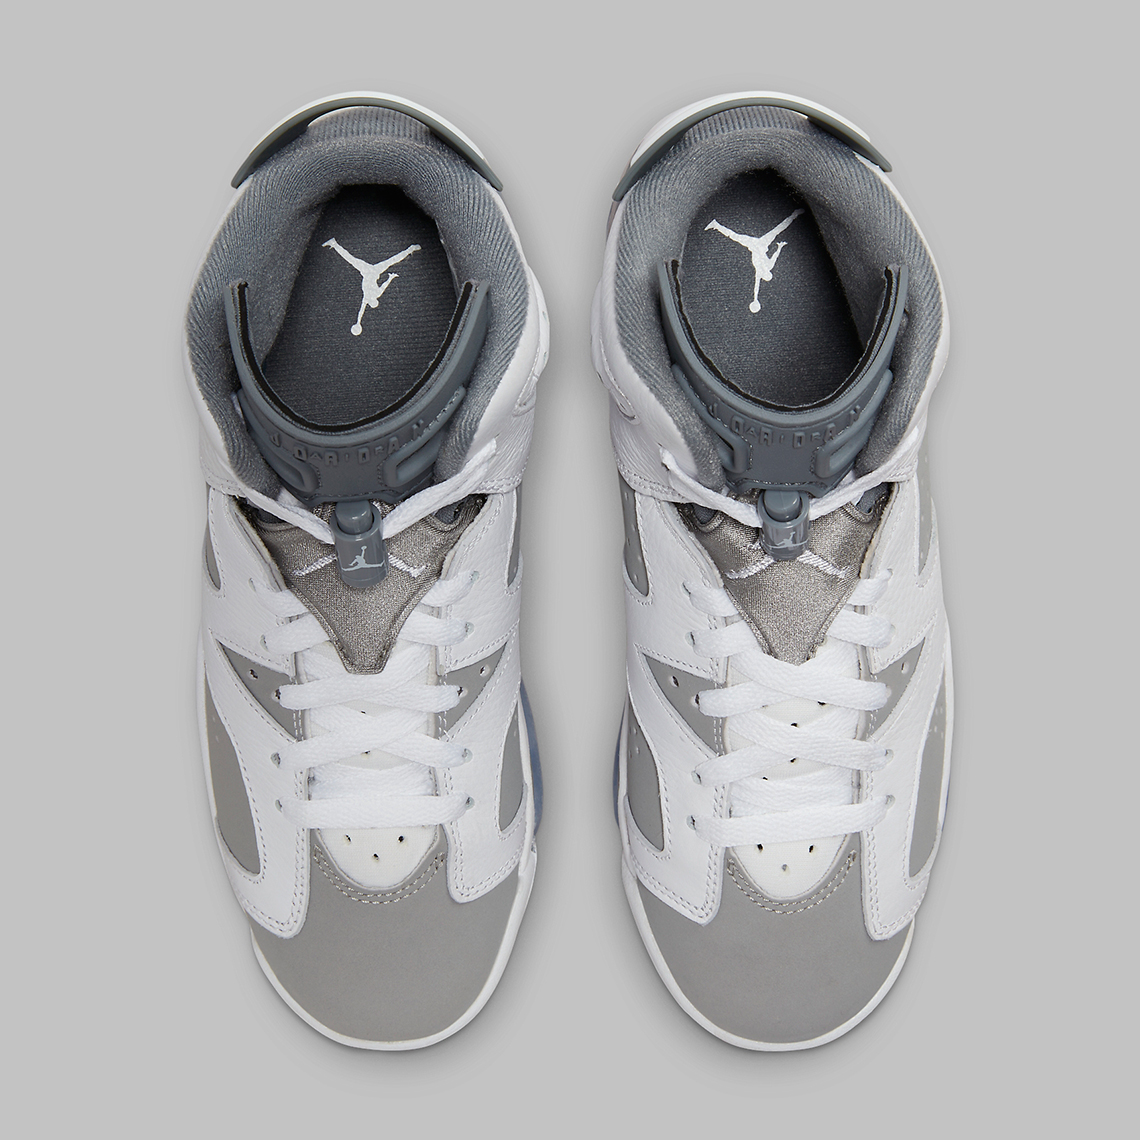 the Air Jordan Saint-GerSneaker 9 NRG Boot drops on Gs Cool Grey 384665 100 6